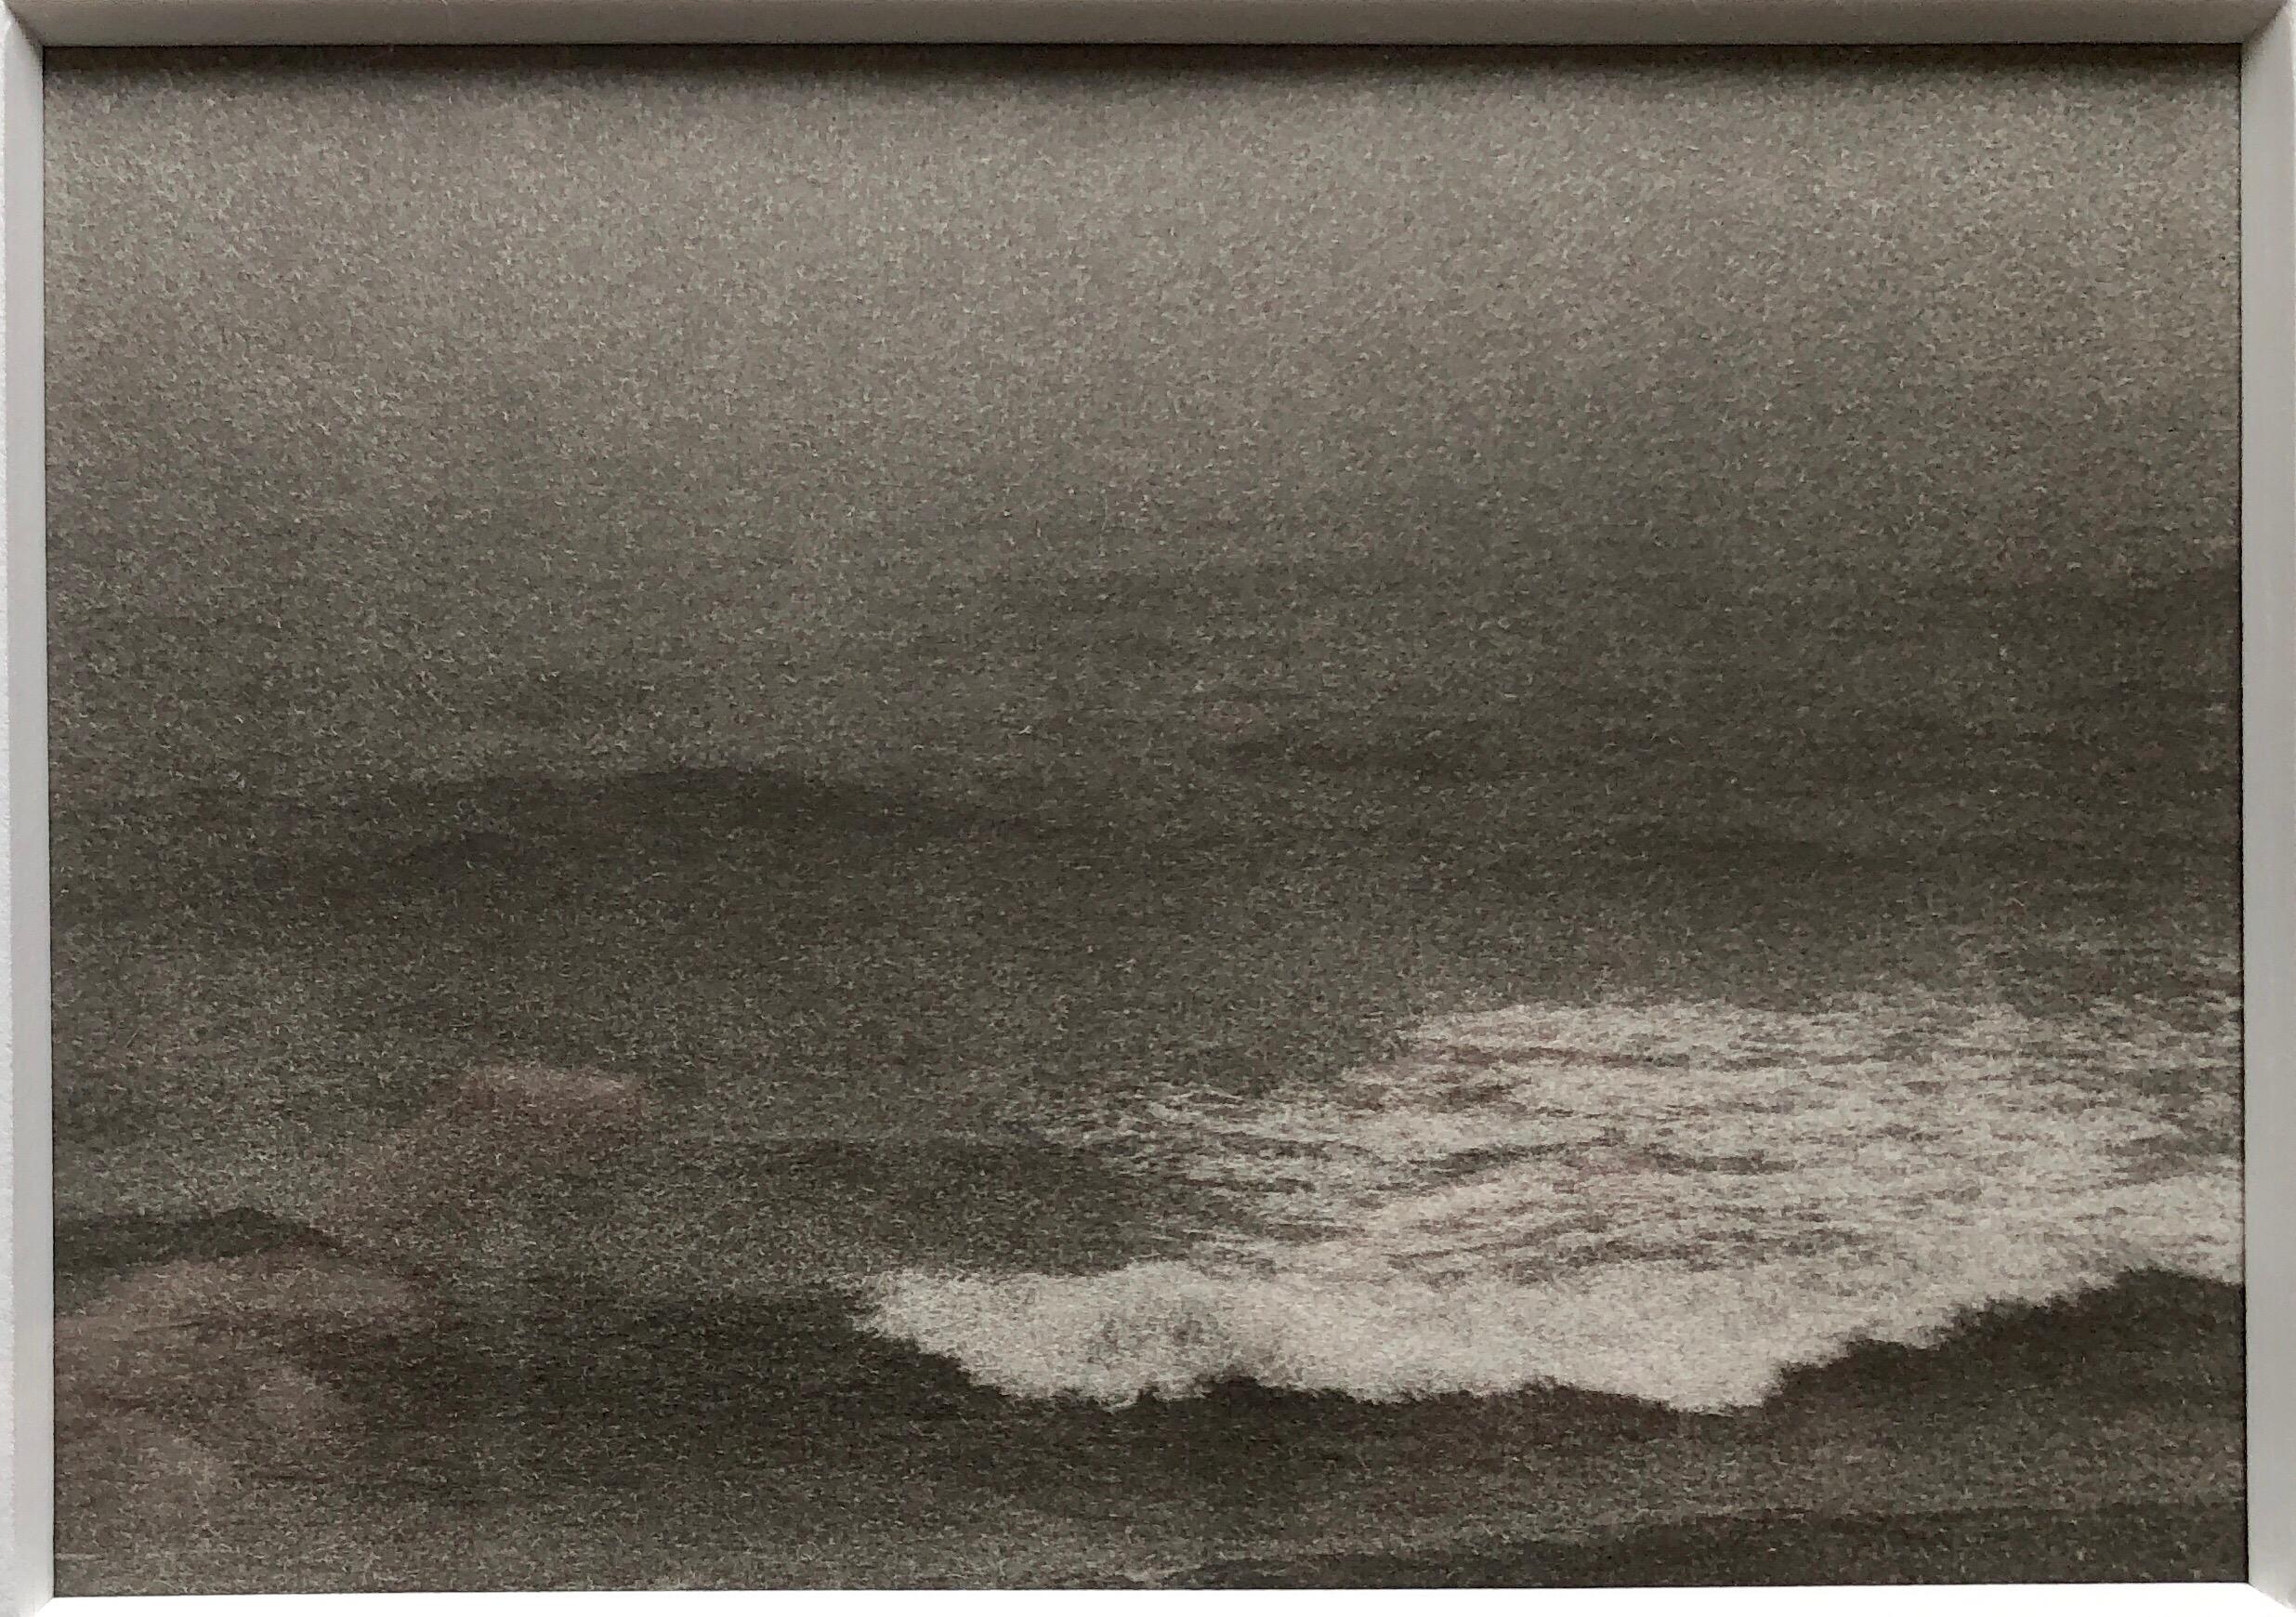 Joni Sternbach Landscape Photograph - Montauk Bluffs, Ocean Photo Vintage Beach Photograph Platinum Palladium Print 